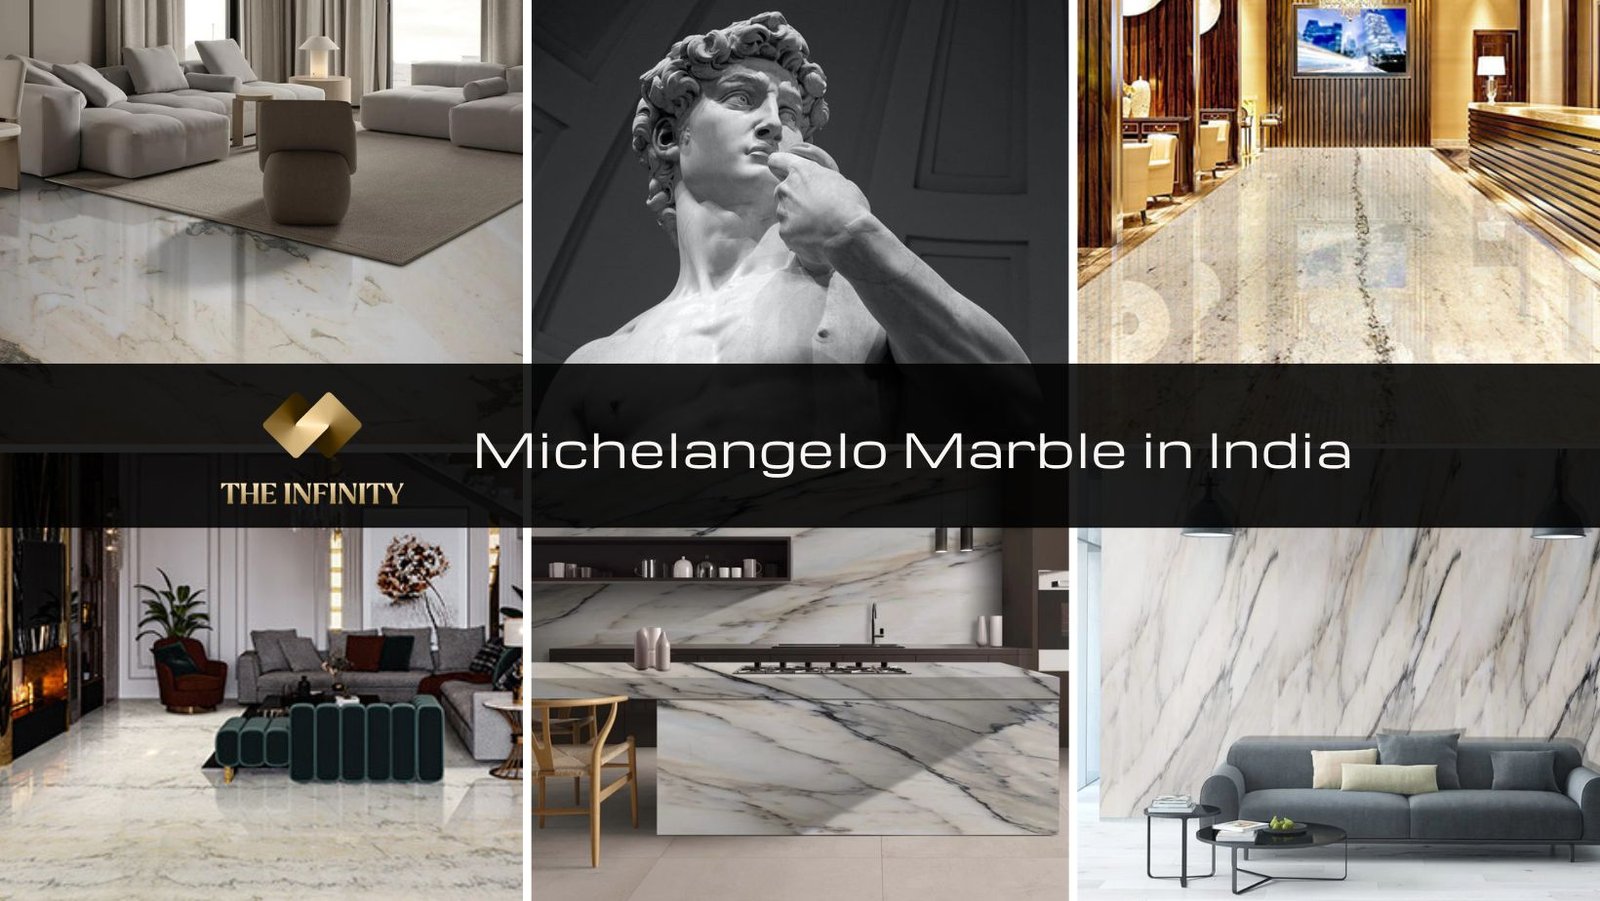 Michelangelo Marble in India